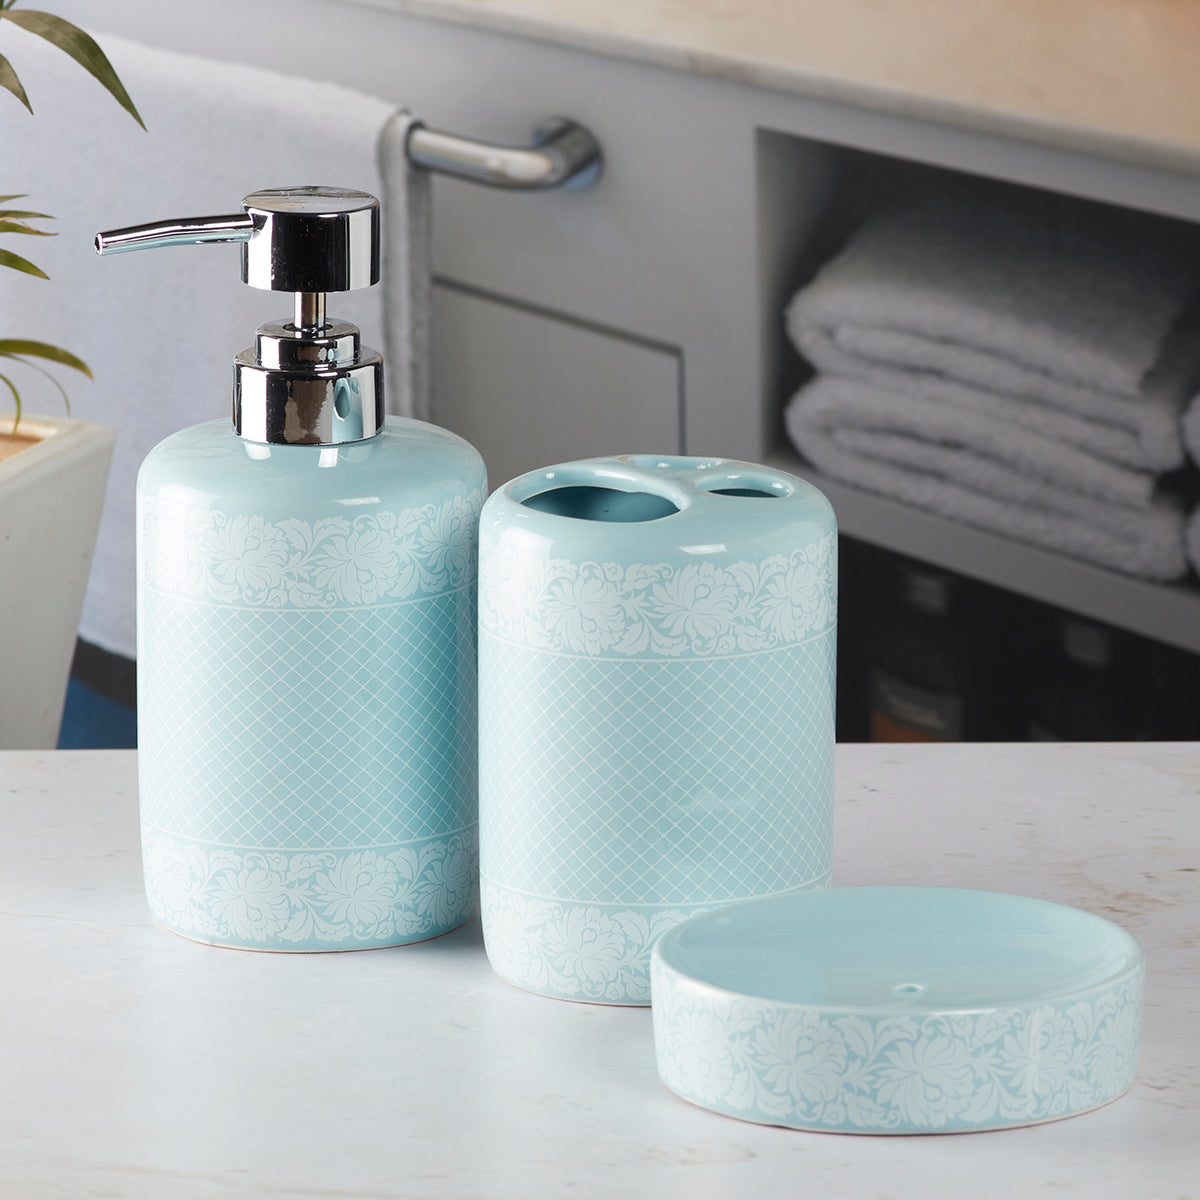 Ceramic Bathroom Accessories Set of 3 Bath Set with Soap Dispenser (5766)